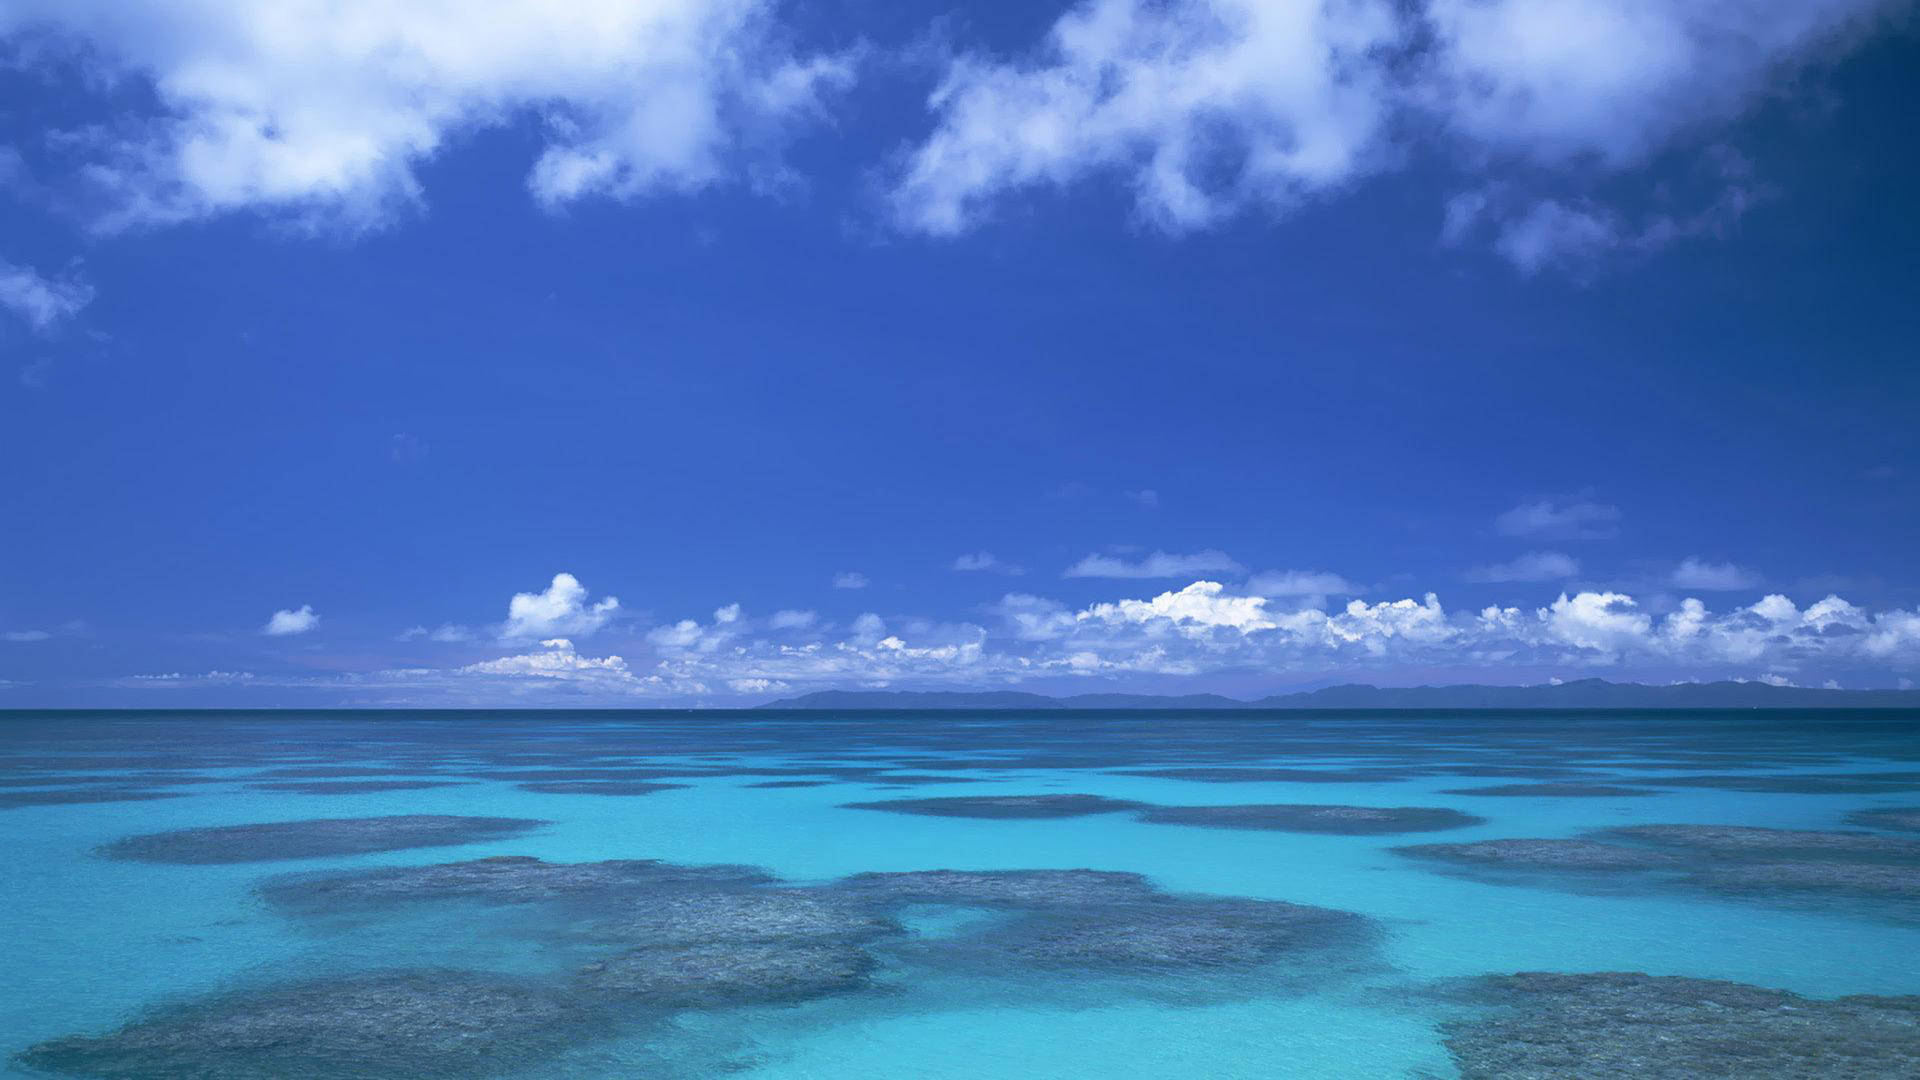 Okinawa Ocean View Background